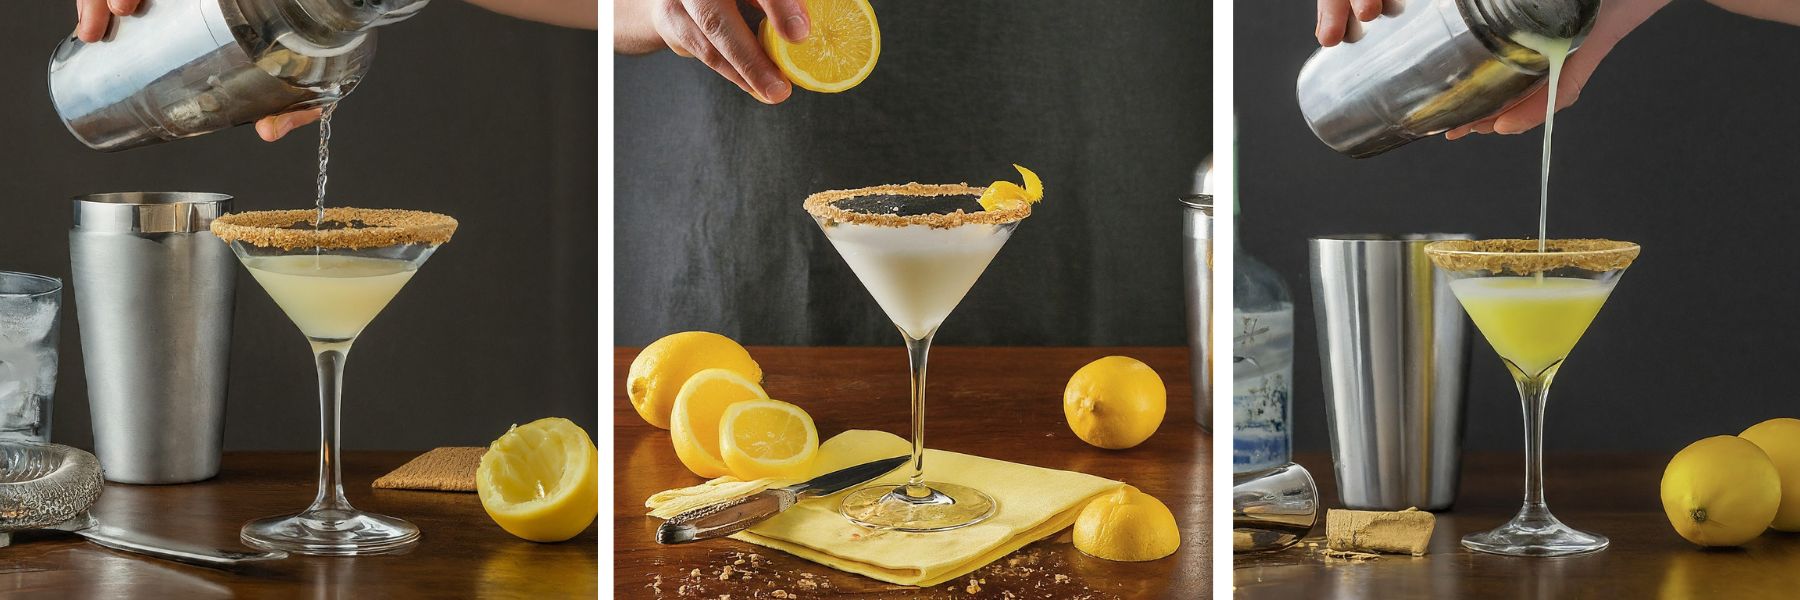 Step-by-step process of making Lemon Meringue Martini, from preparation to garnishing